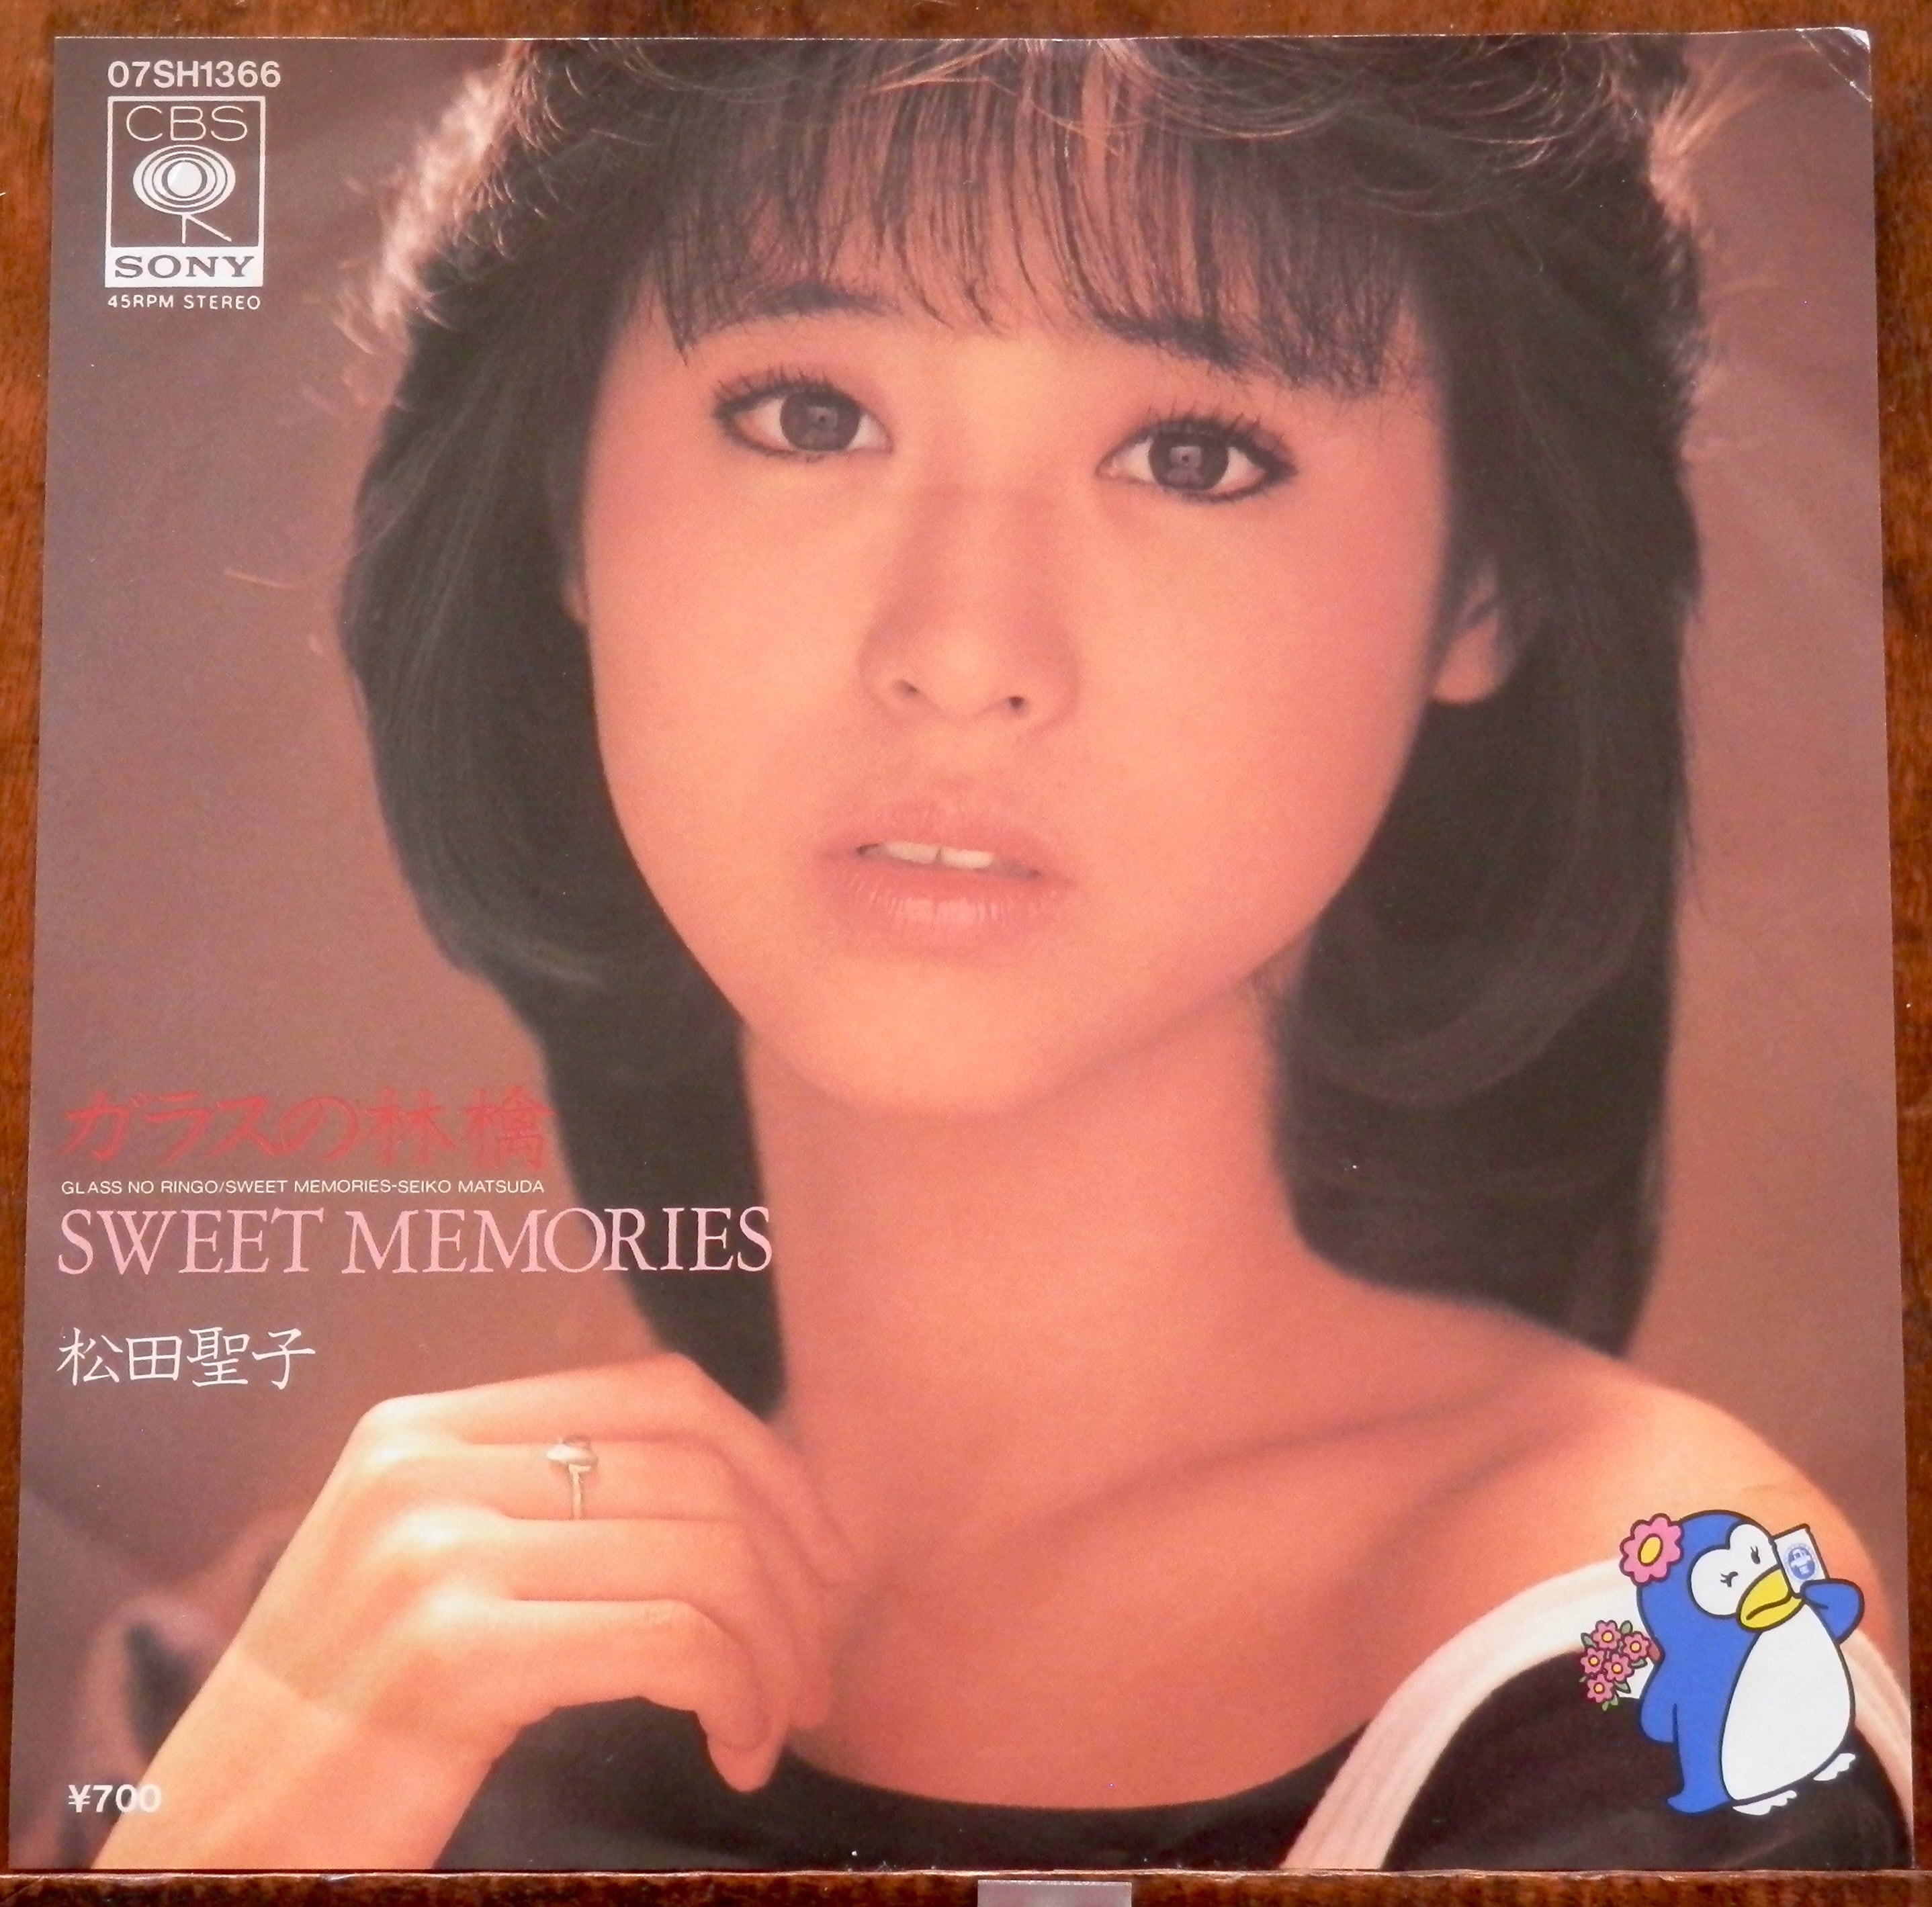 '83【EP】松田聖子 - ガラスの林檎/SWEET MEMORIES *両A面盤